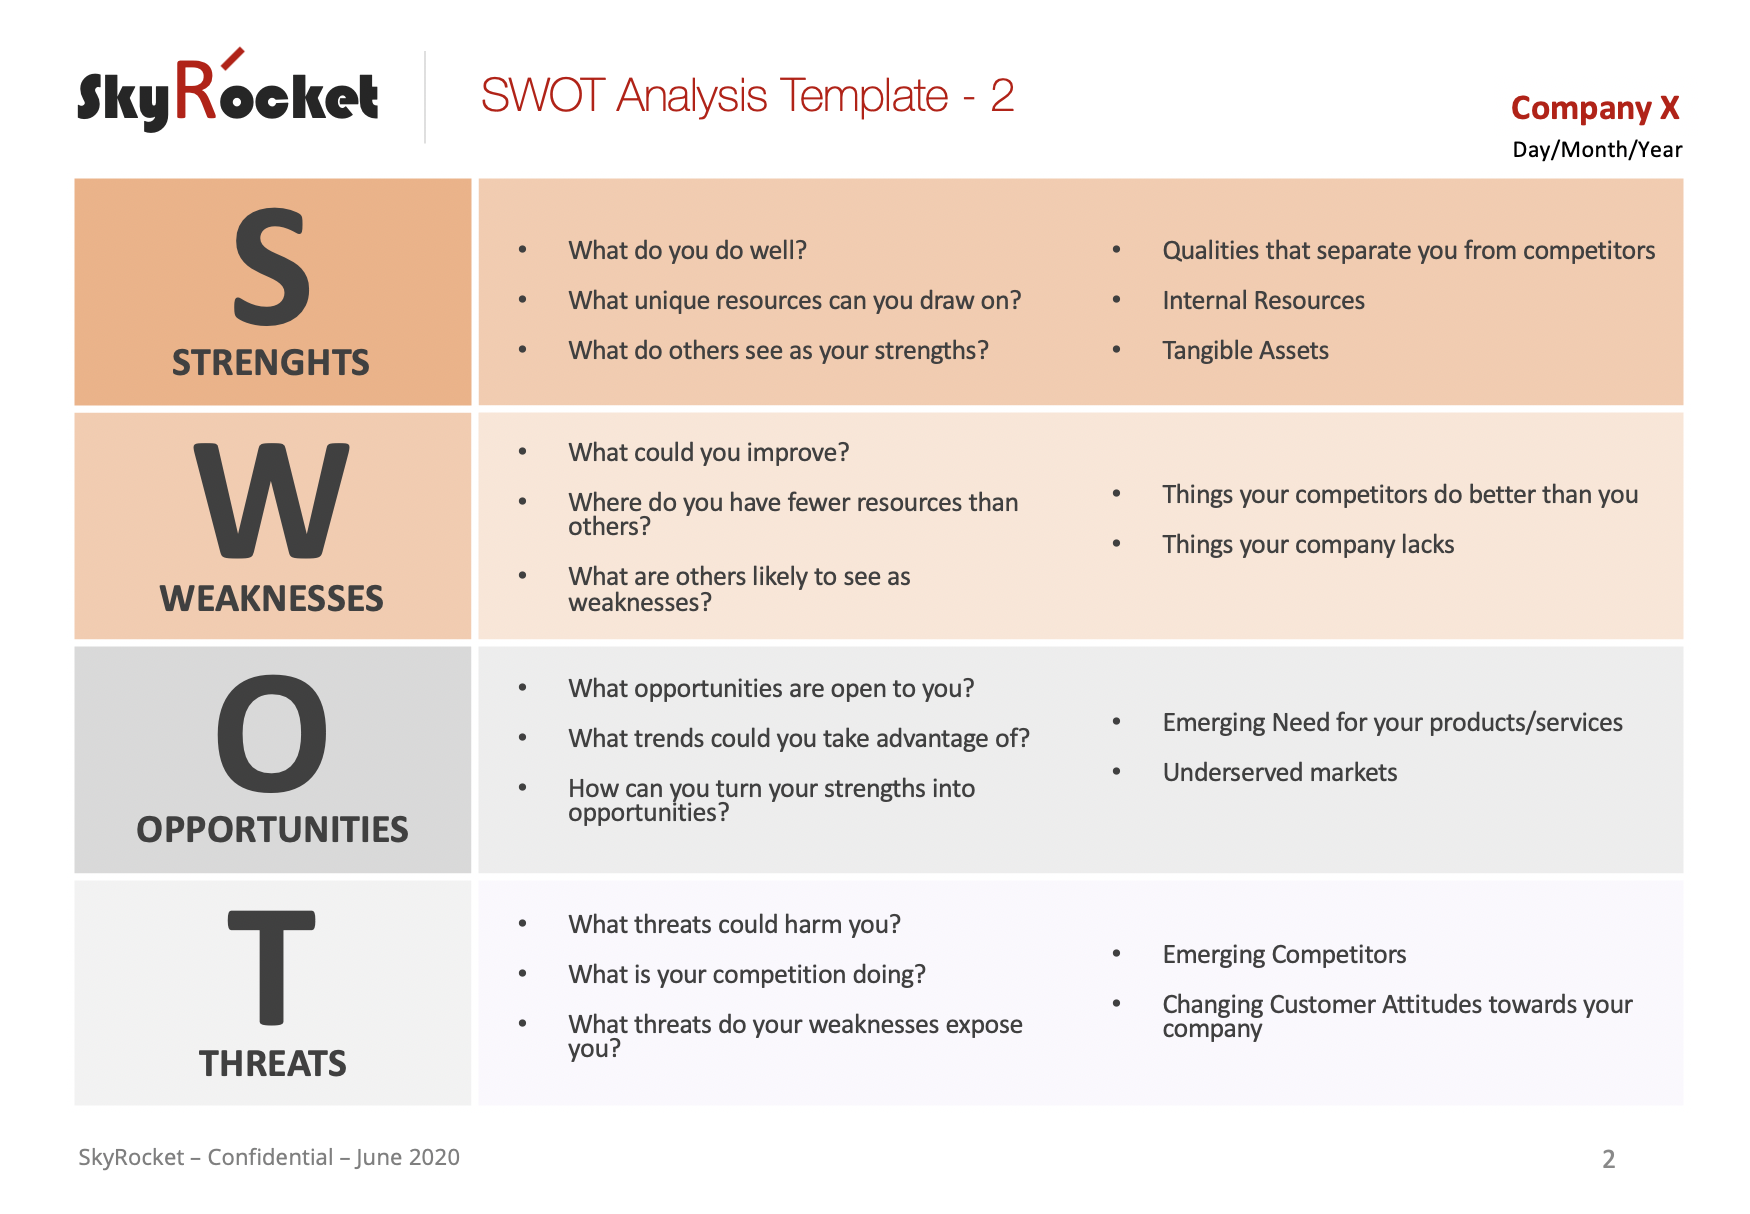 swot analysis in conducting strategic planning